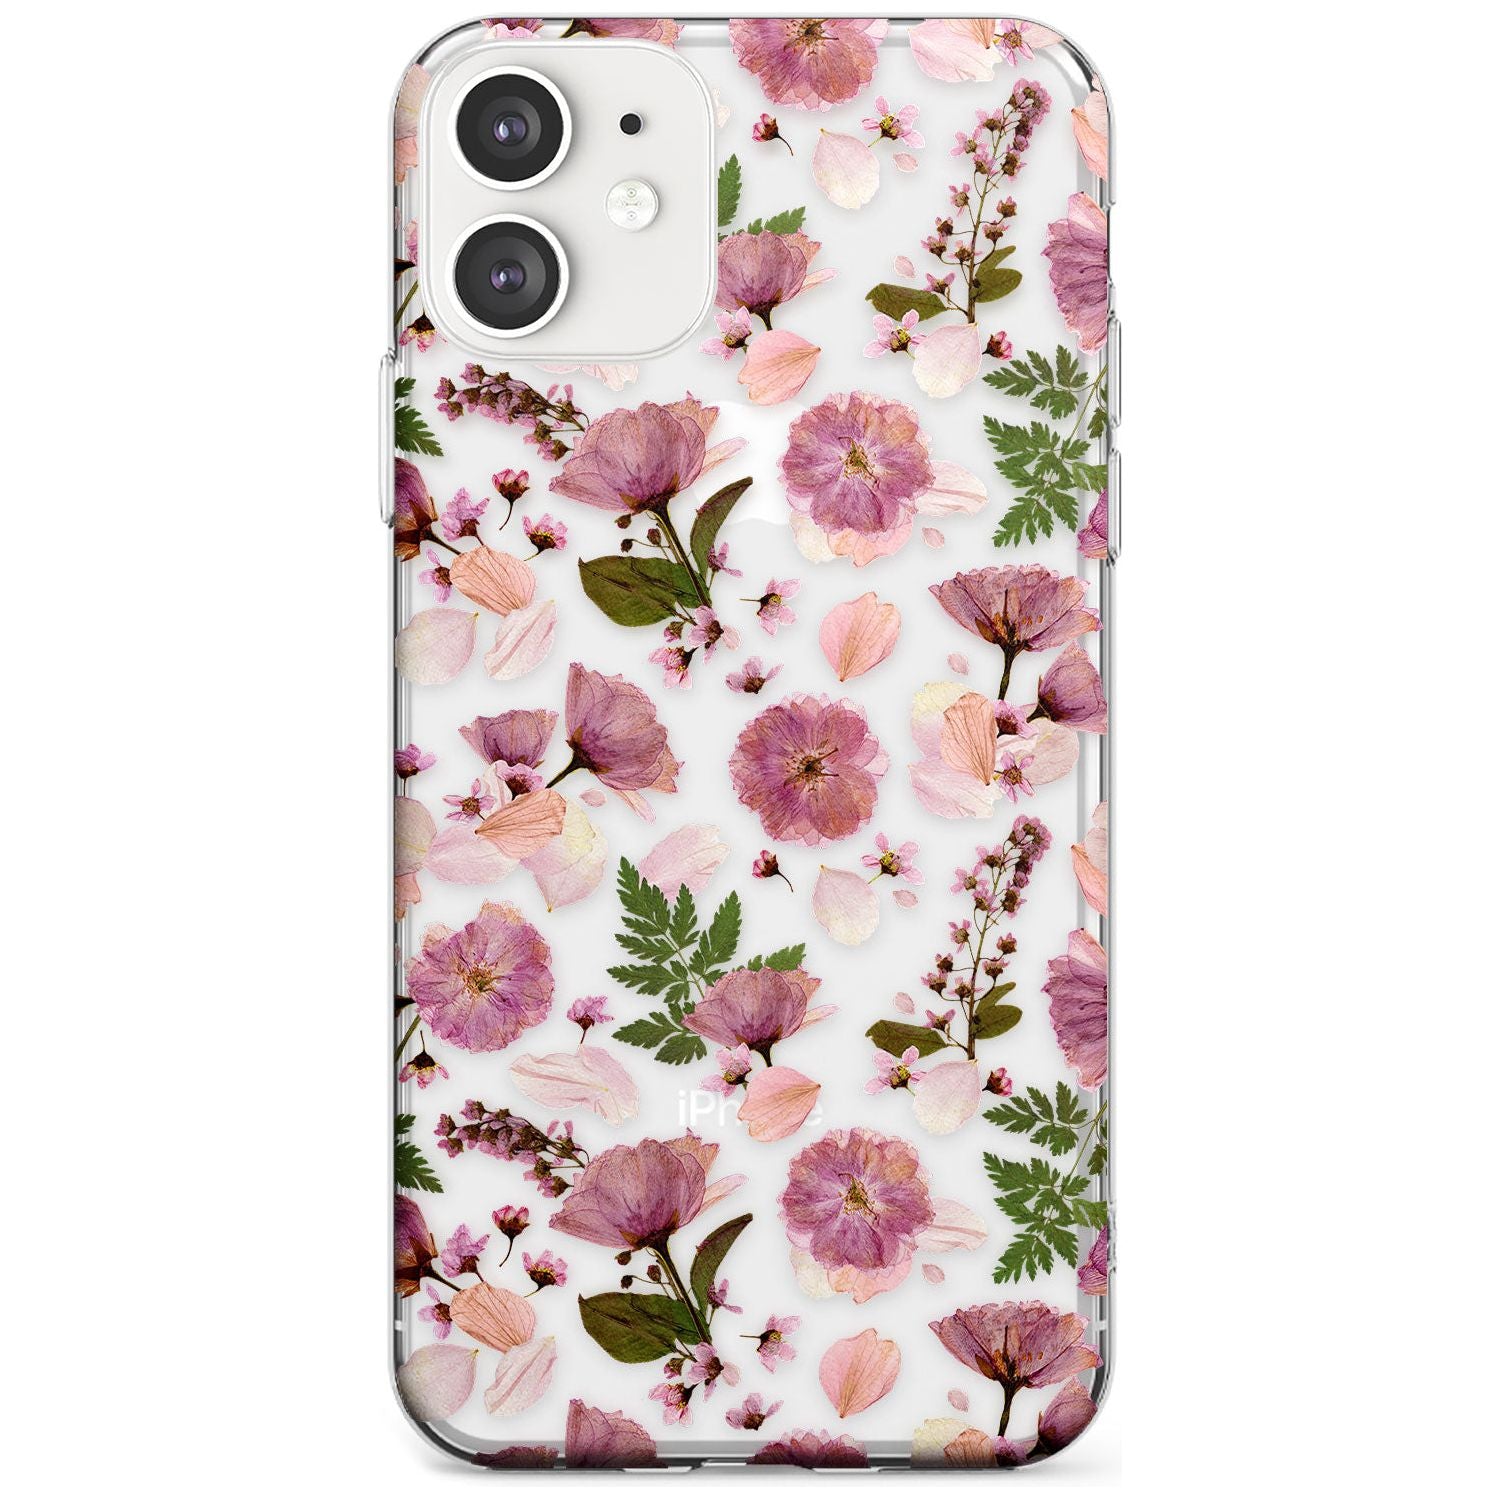 Floral Menagerie Transparent Design Slim TPU Phone Case for iPhone 11